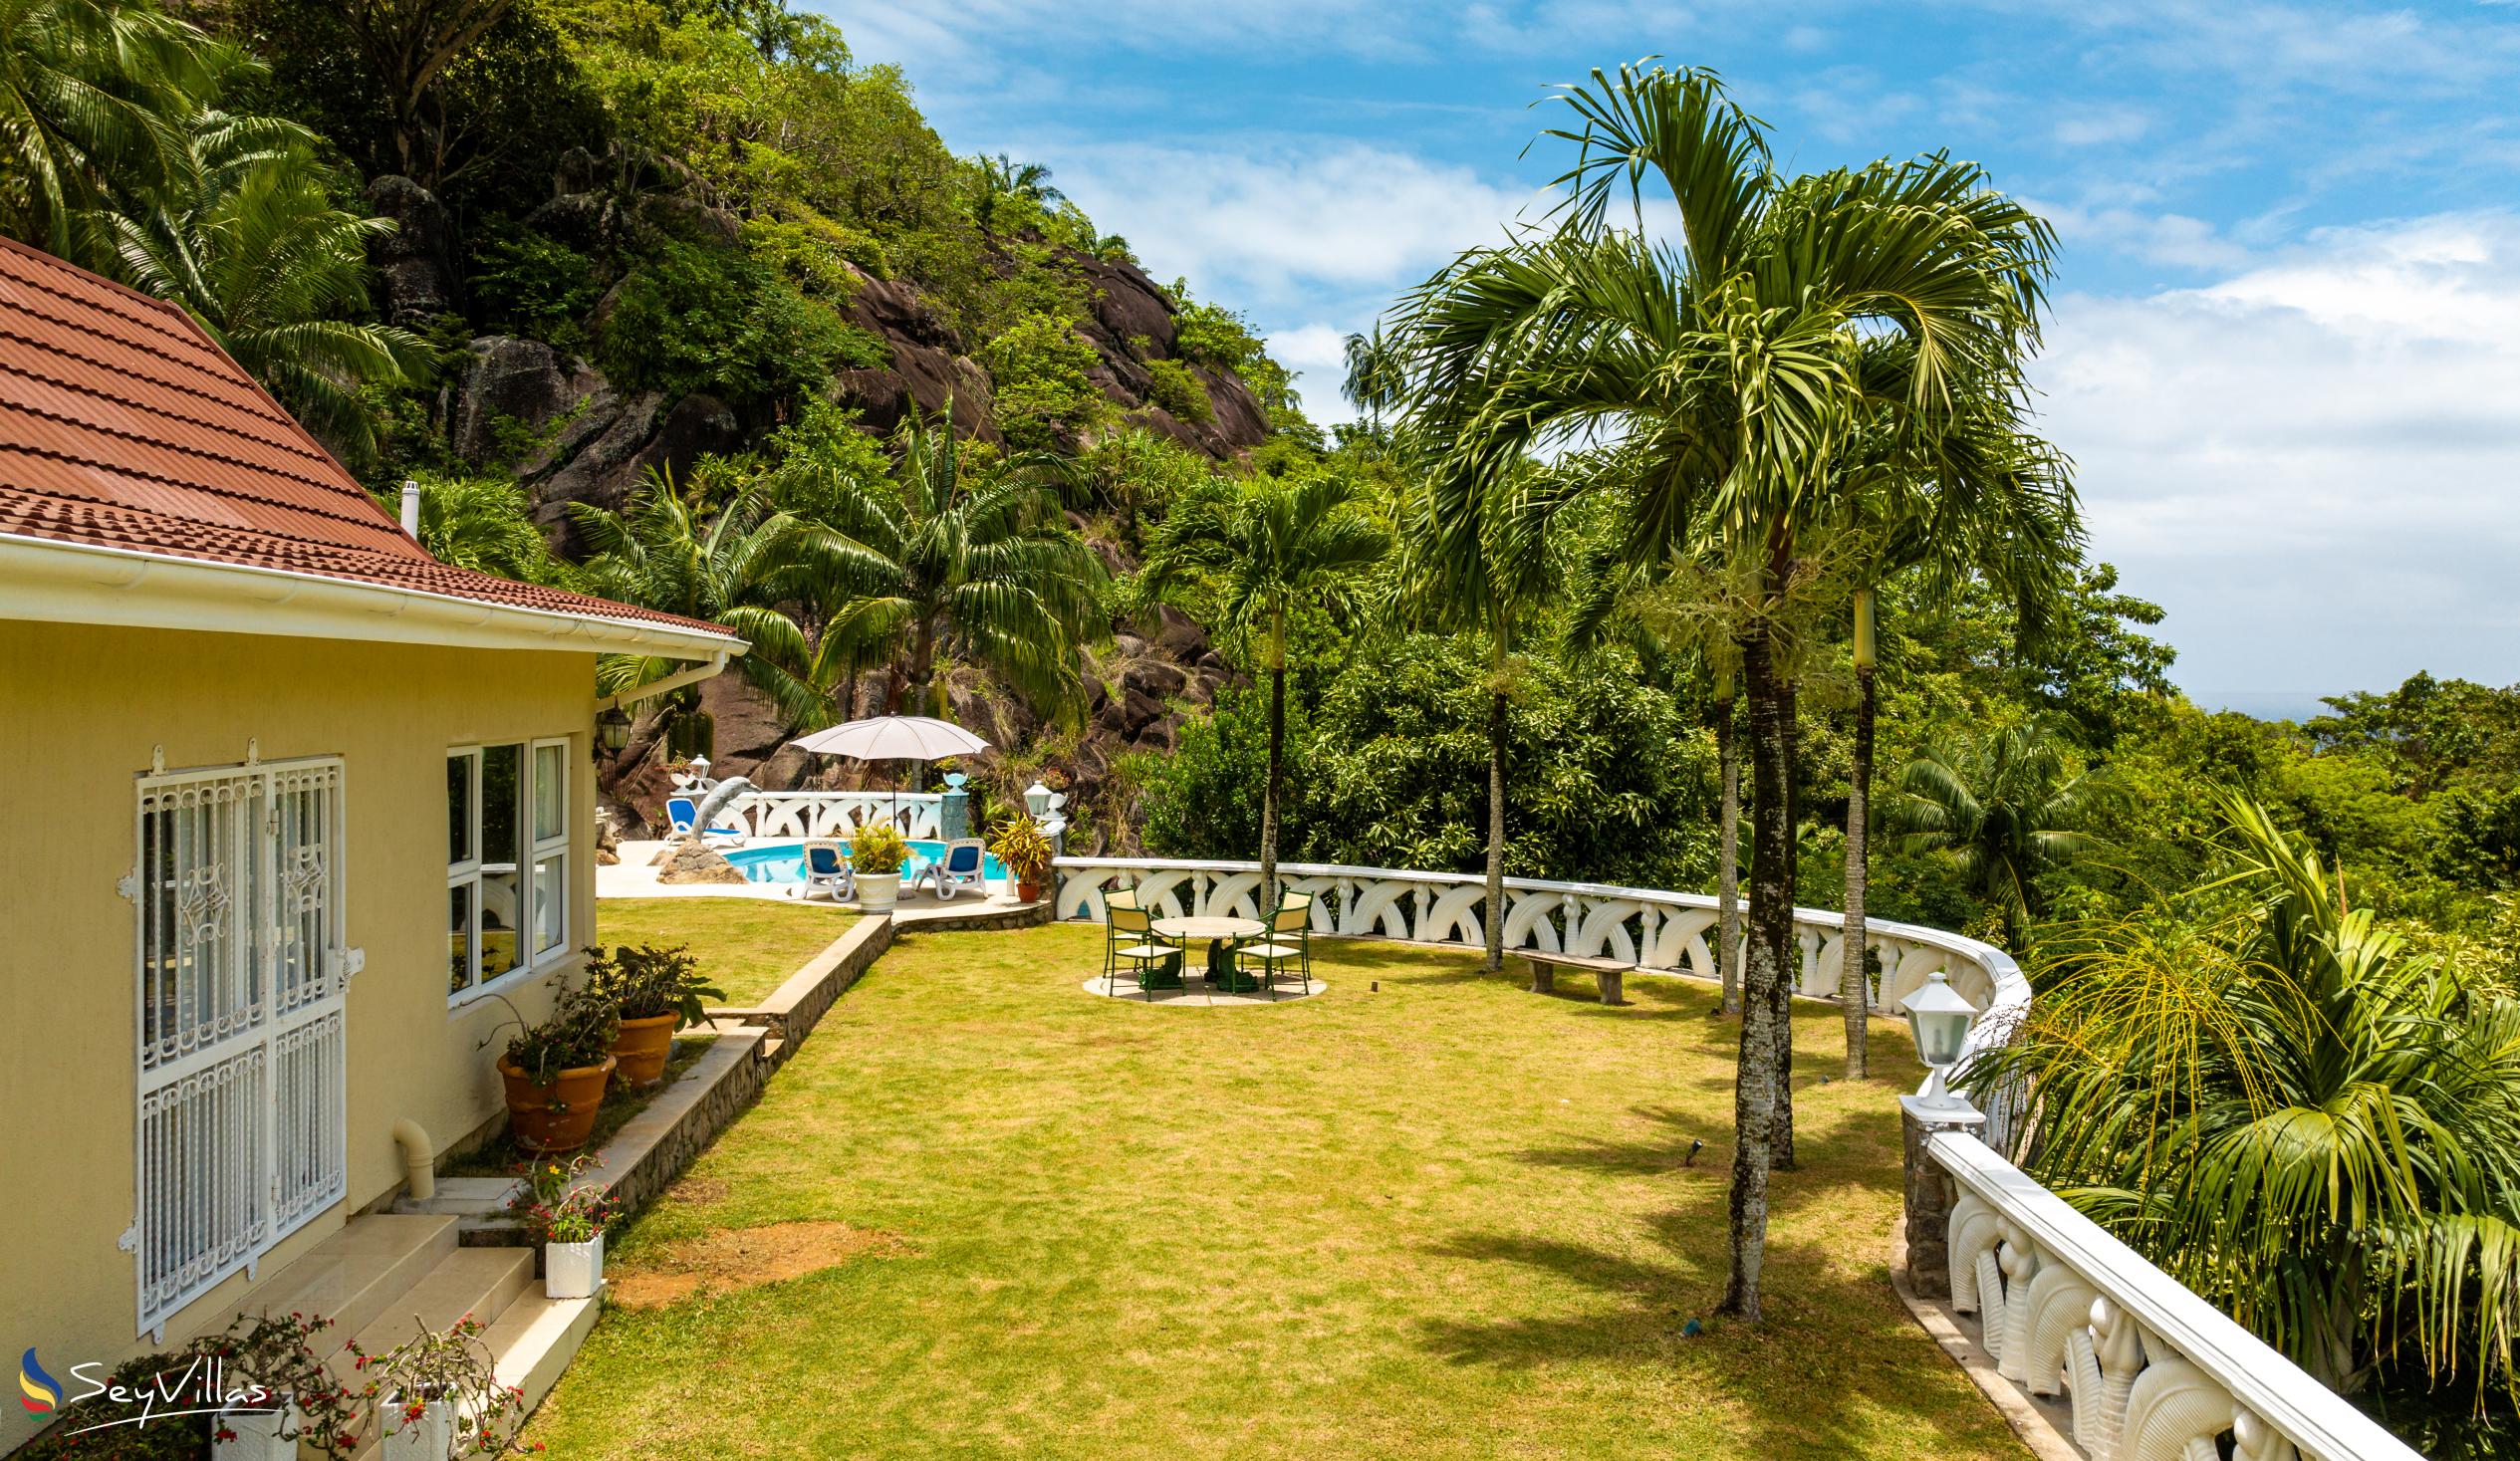 Foto 6: Villa Gazebo - Aussenbereich - Mahé (Seychellen)